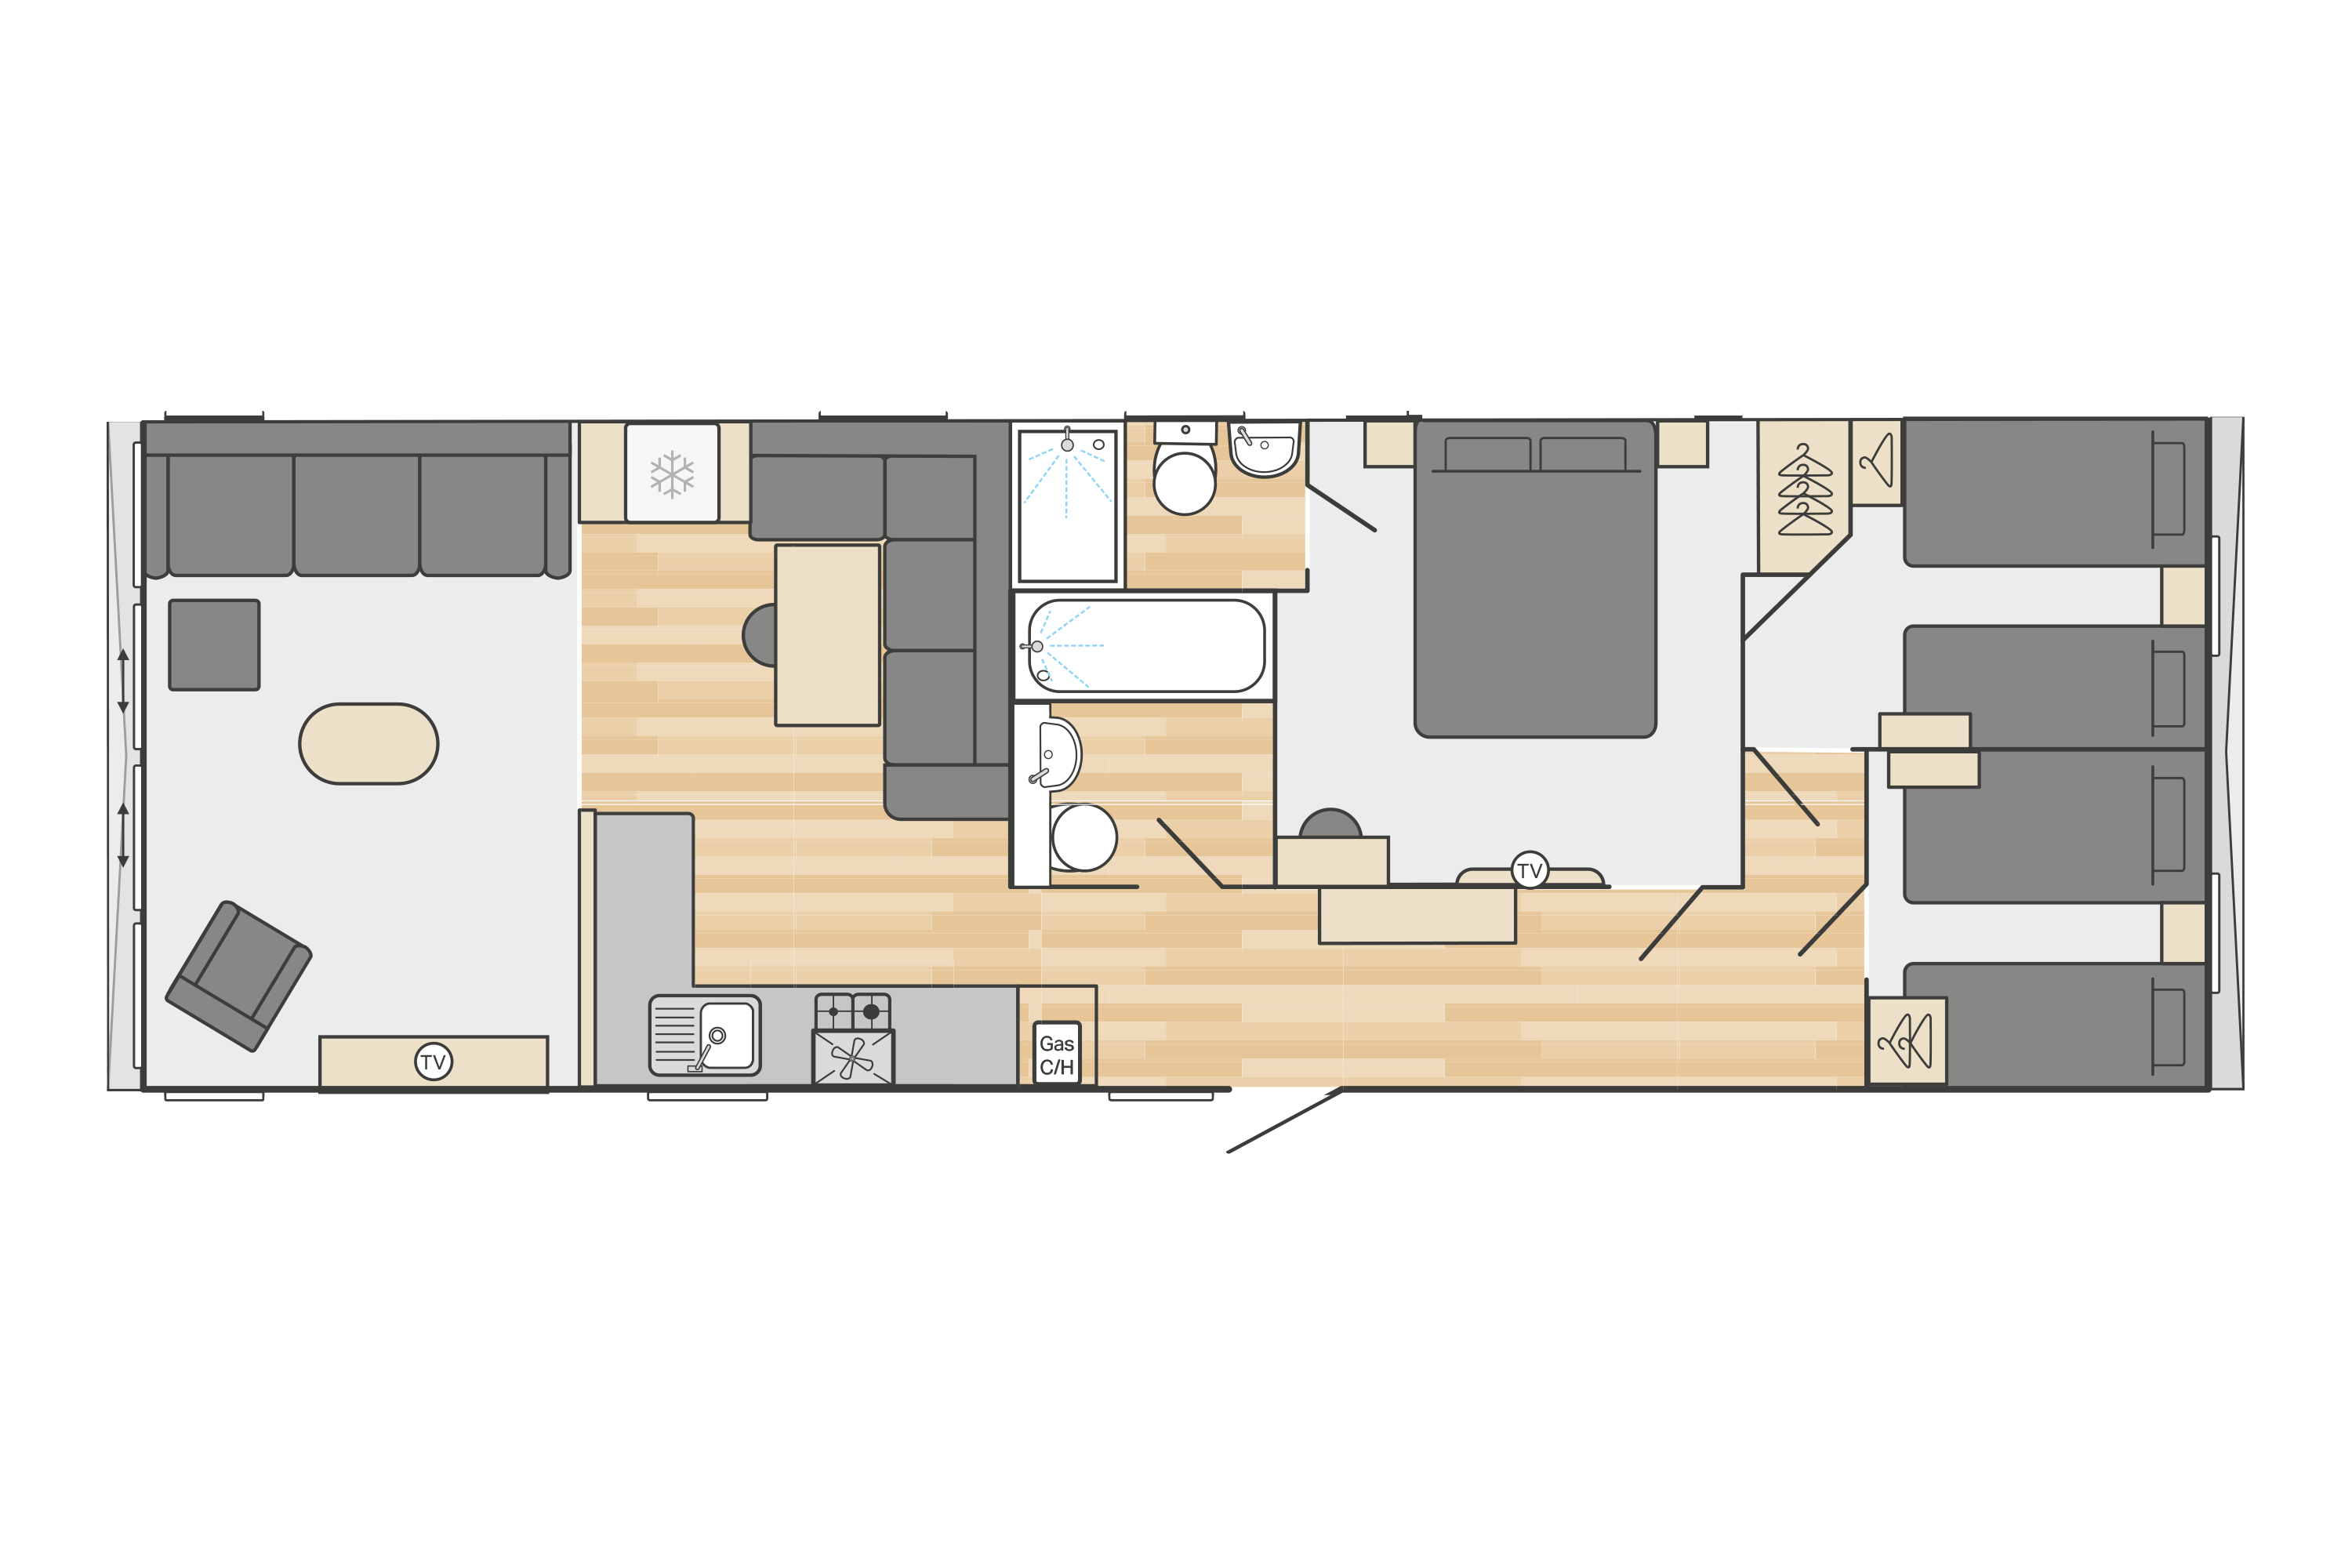 Moselle Lodge (Country) 42' x 14' - 3 Bedroom floorplan